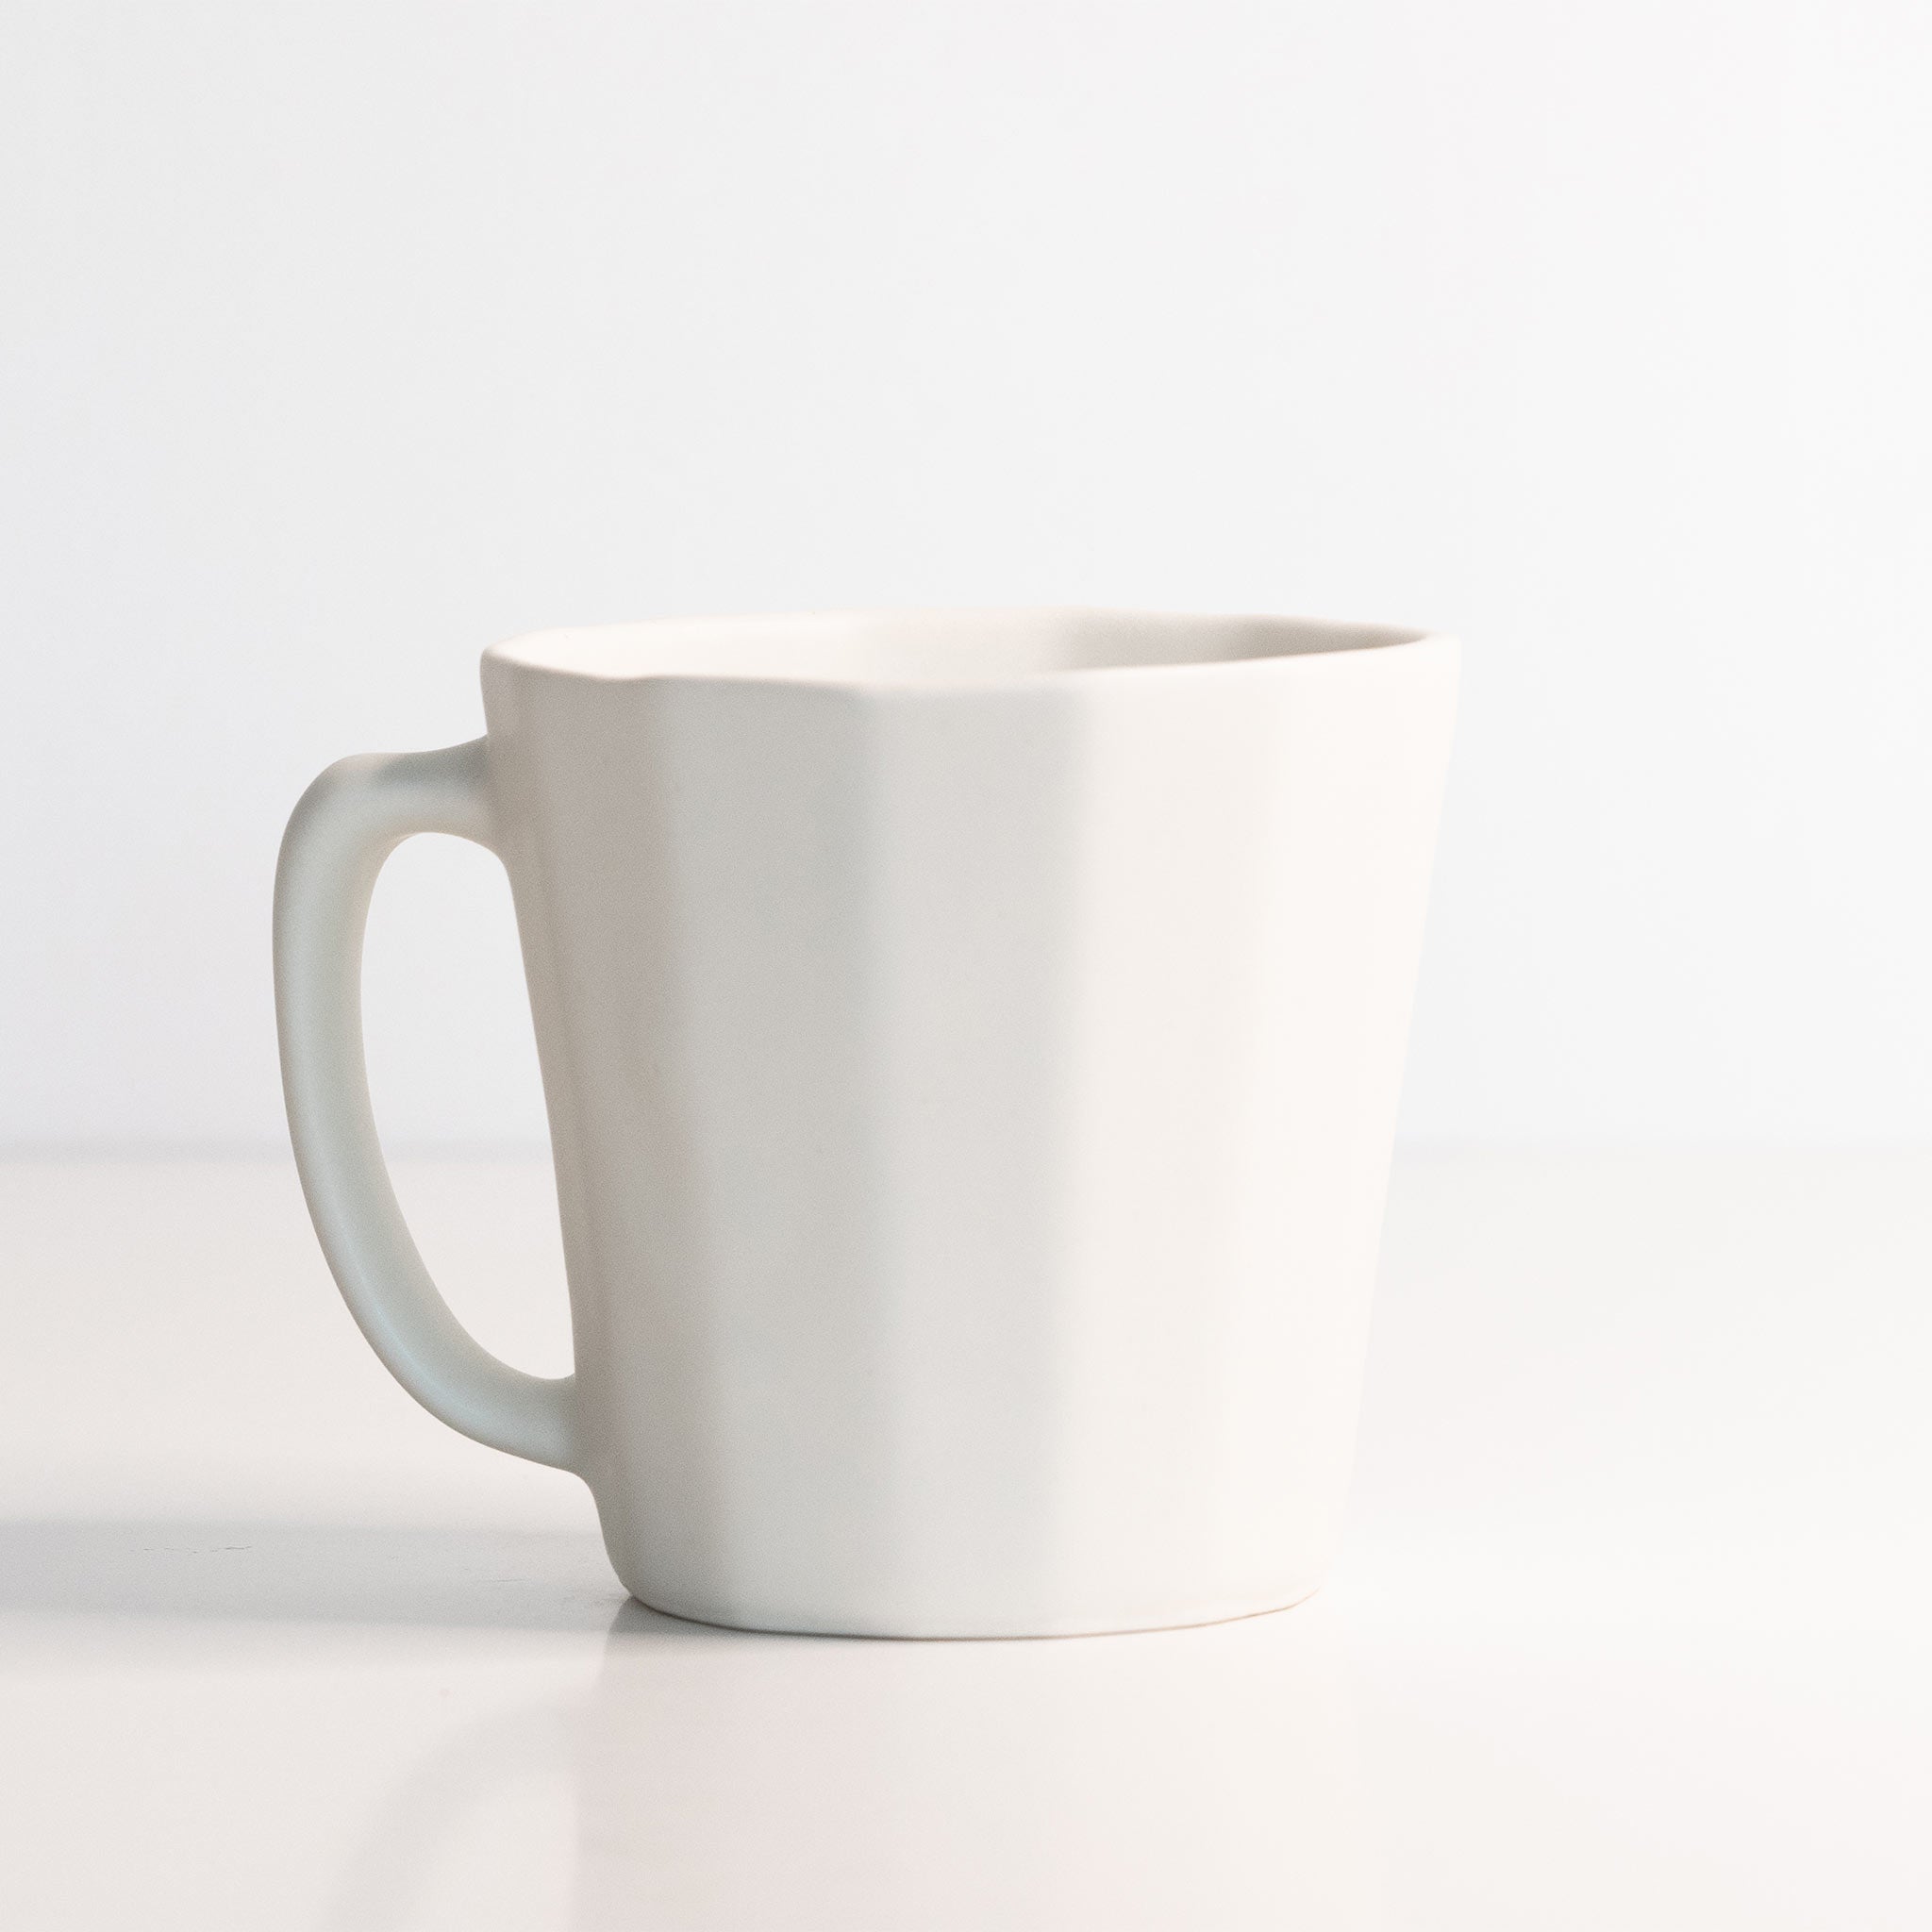 Ceramic Porcelain Mixing Bowl Set - The Bright Angle